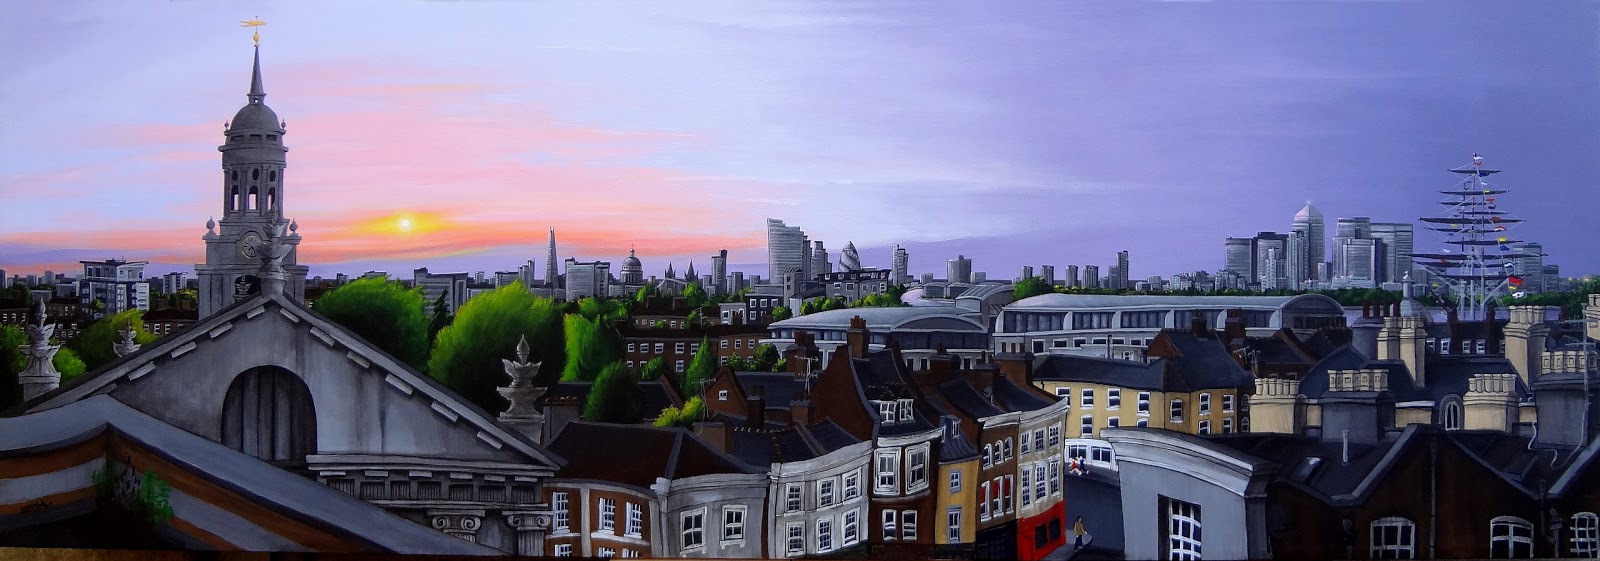 Daniel Worth Art: Greenwich Panorama